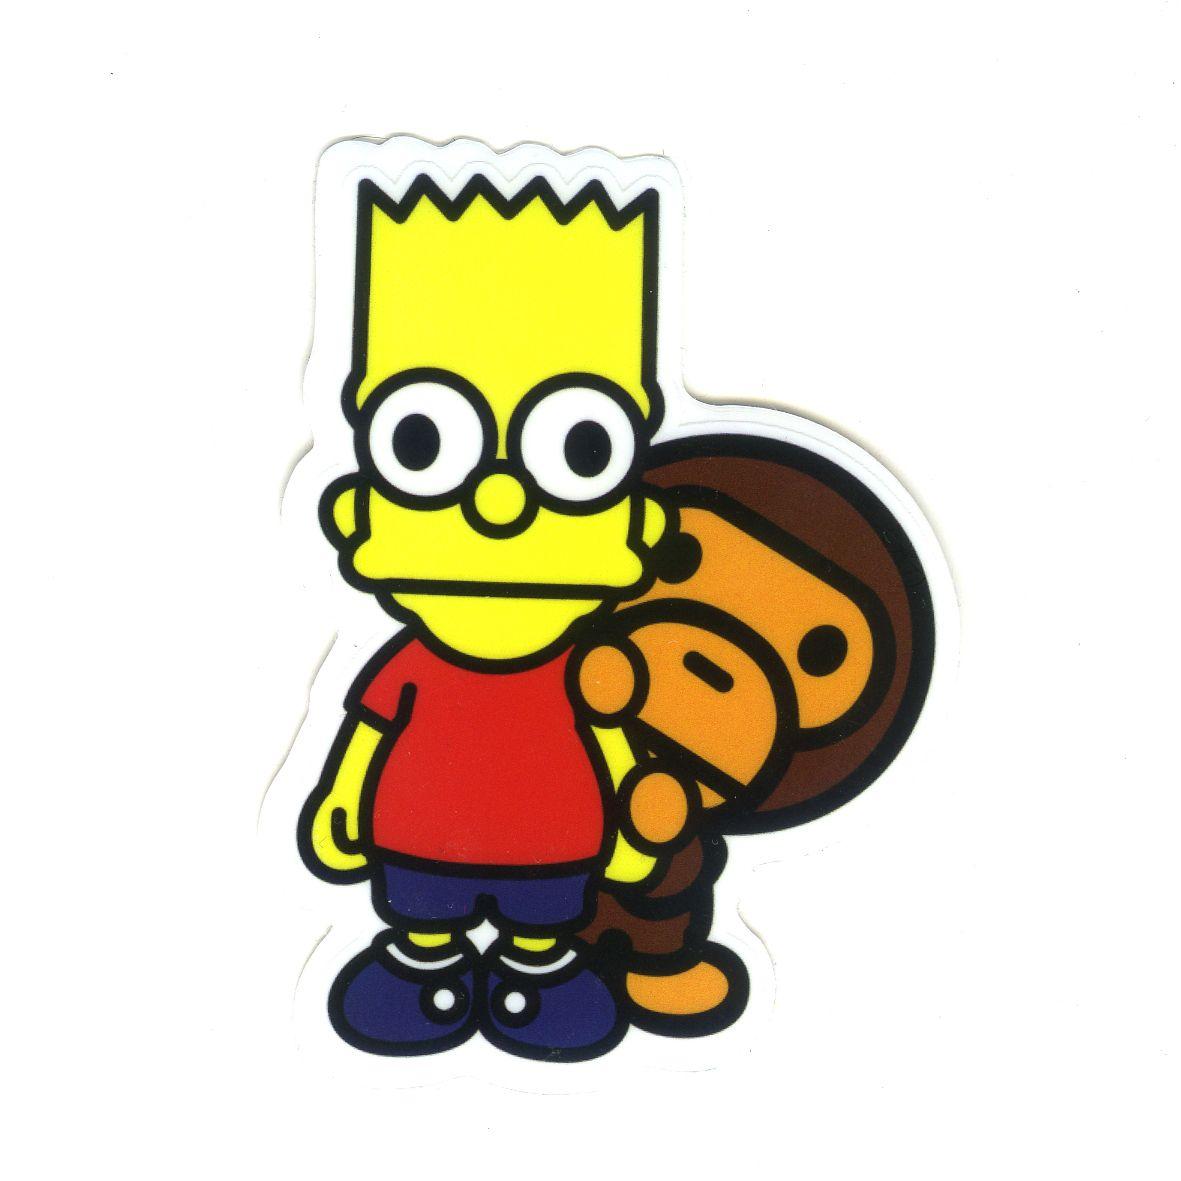 Bart Simpson x Baby Milo, Height 8 cm, decal sticker in 2018